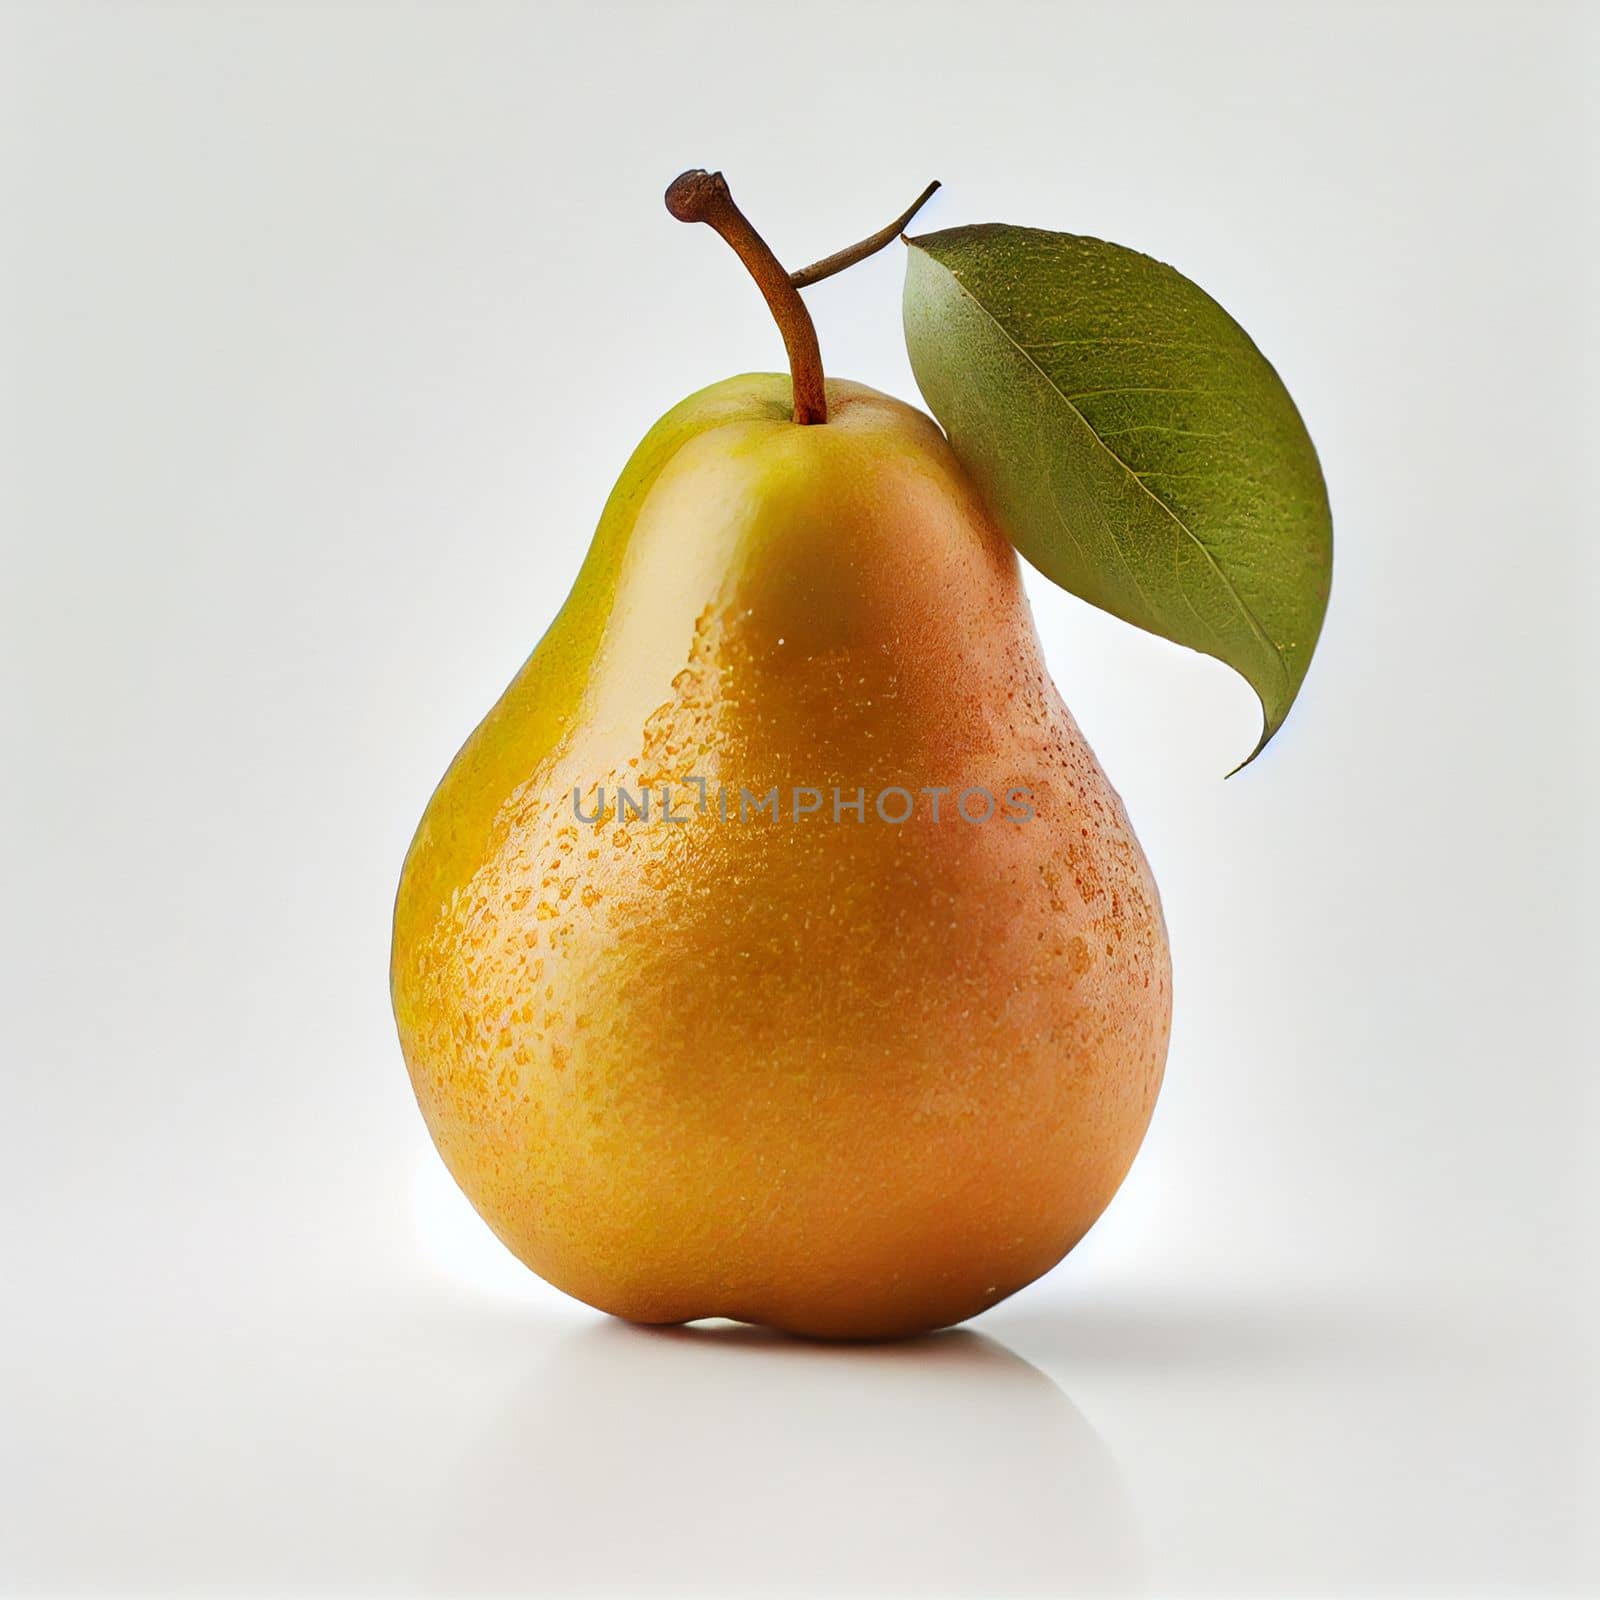 Pear fruit isolated on white background.